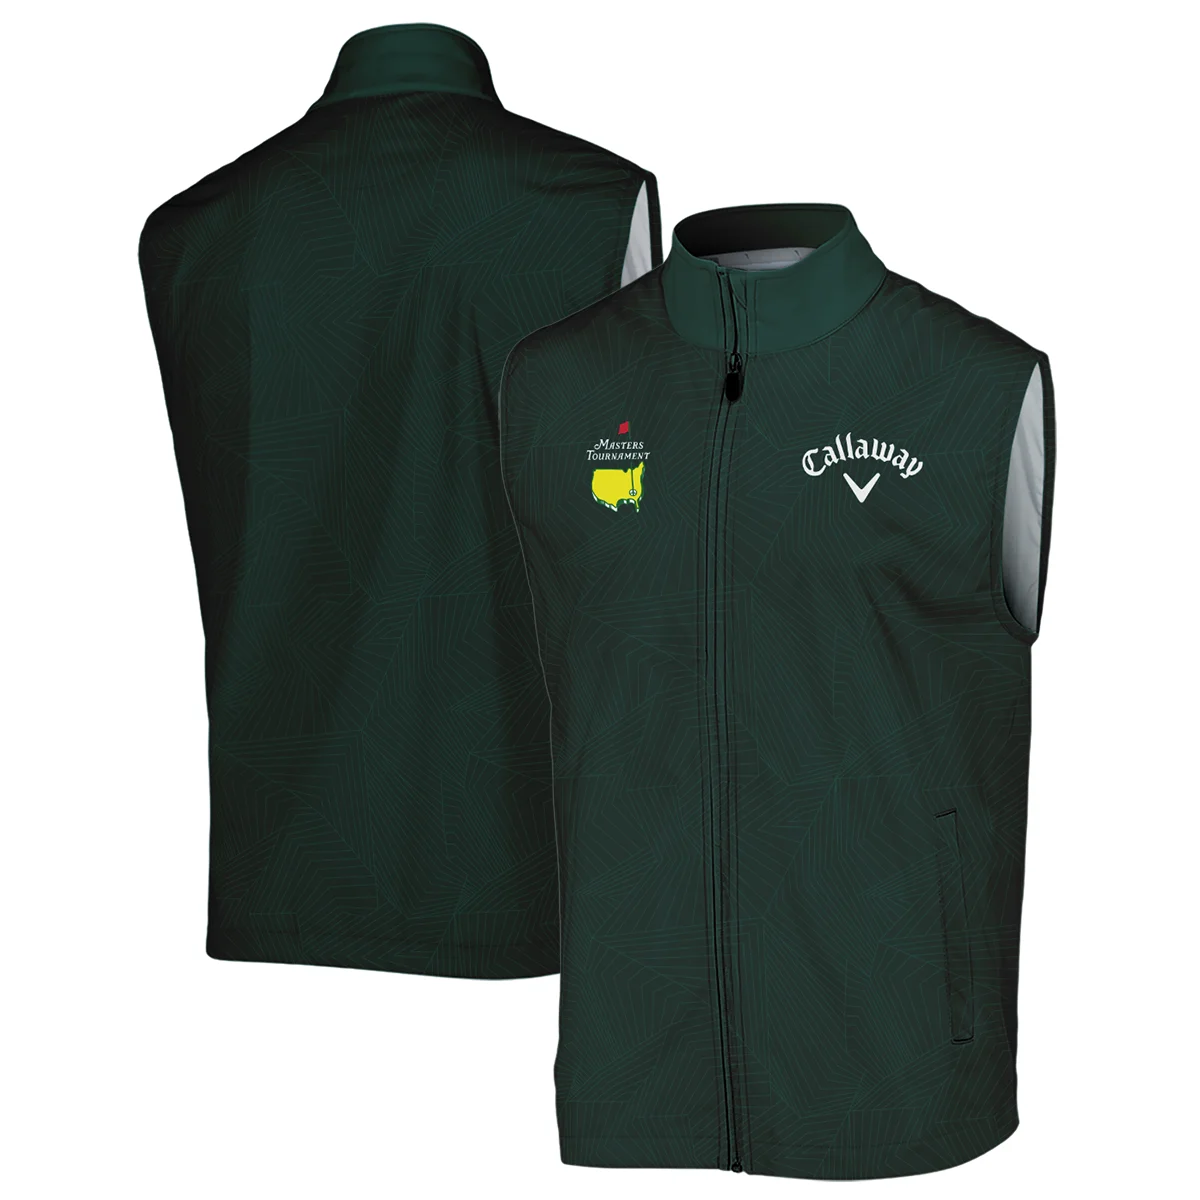 Masters Tournament Callaway Pattern Sport Jersey Dark Green Zipper Polo Shirt Style Classic Zipper Polo Shirt For Men